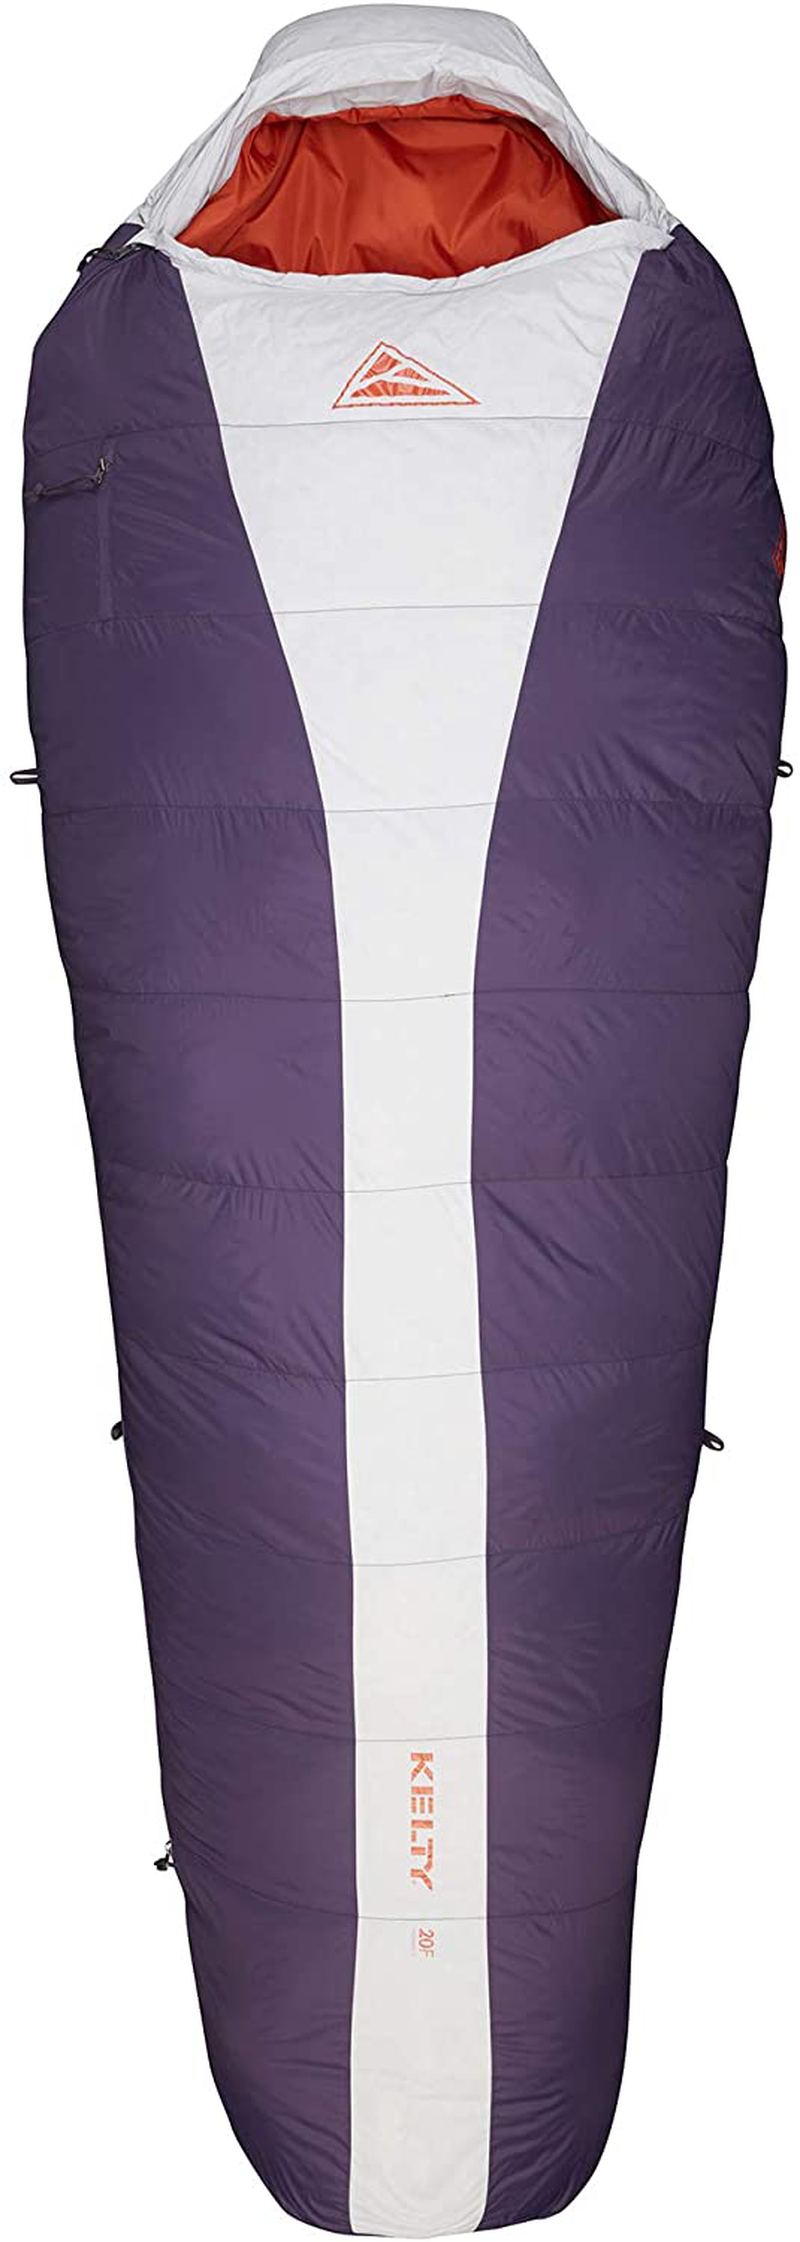 Kelty Cosmic 20 Degree down Sleeping Bag - Ultralight Backpacking Camping Sleeping Bag with Stuff Sack